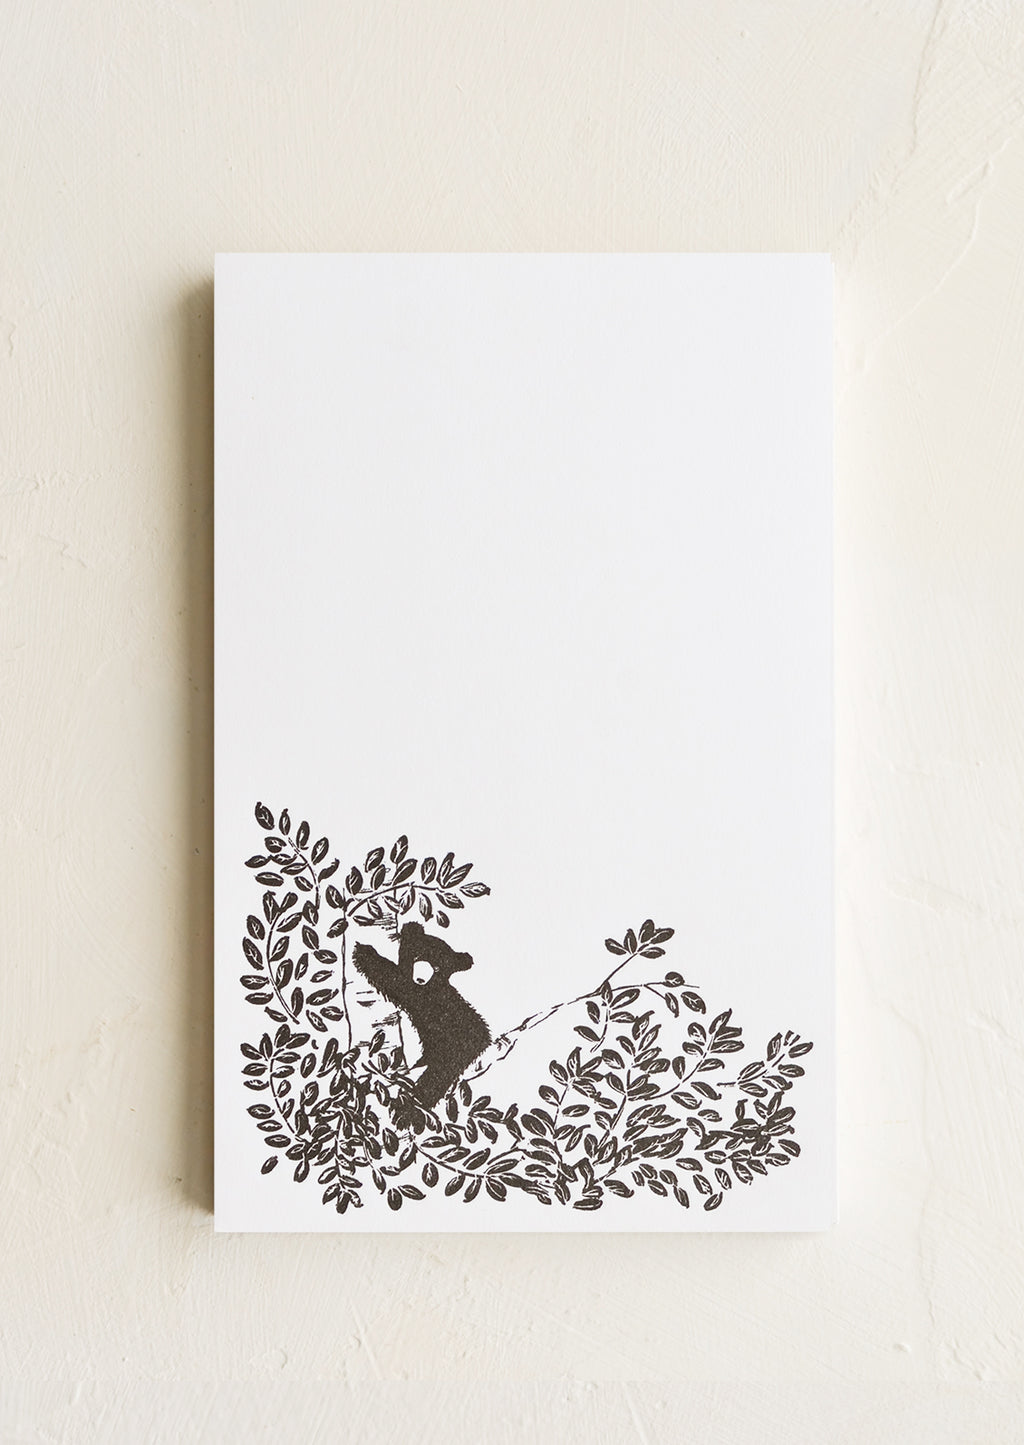 Bear Cub: A letterpress printed notepad with panda design at bottom.